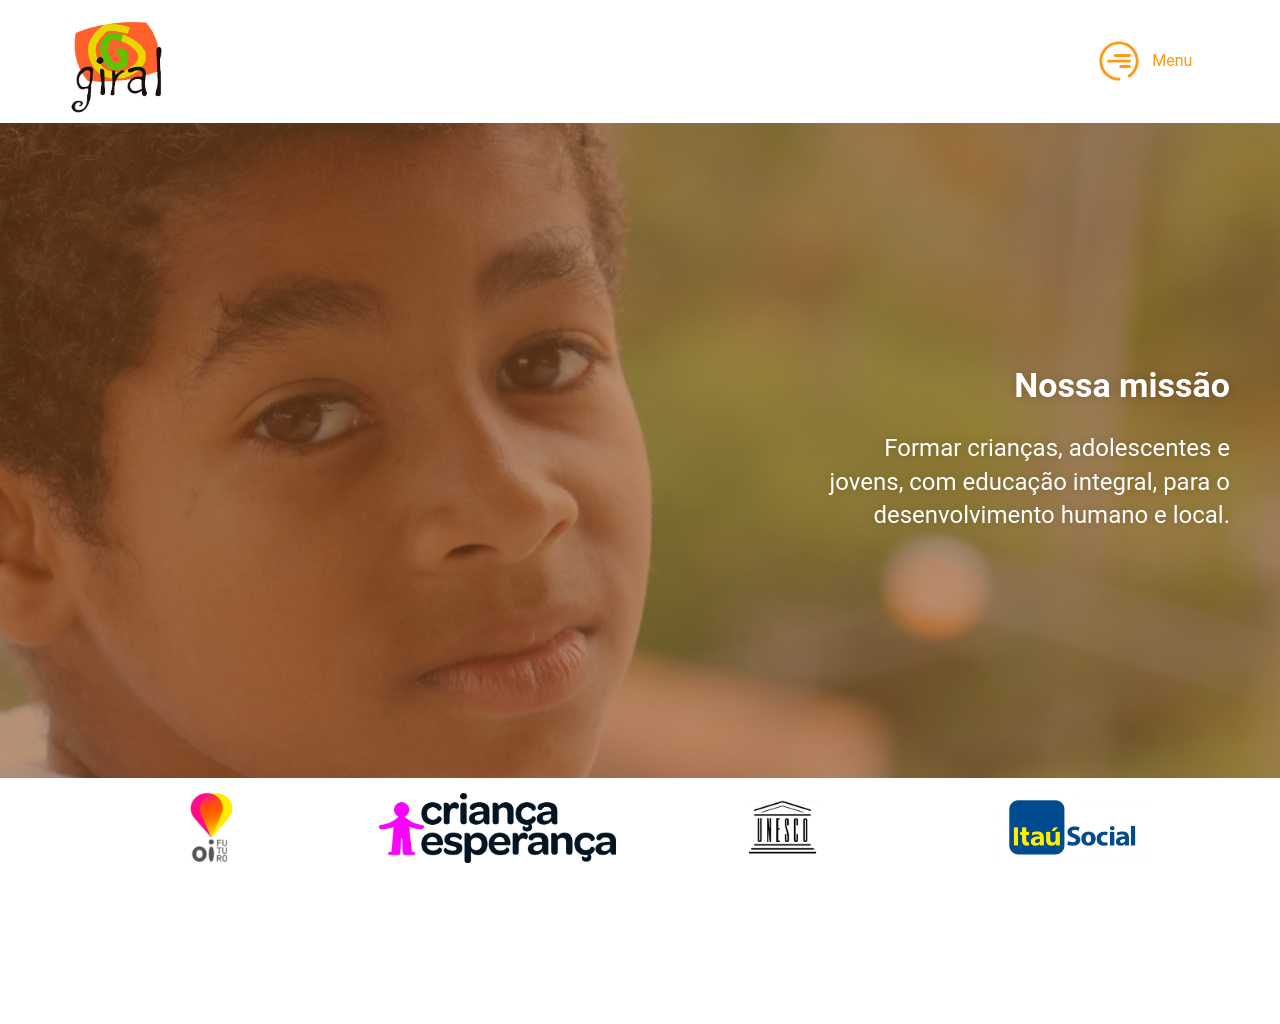 giral.org.br